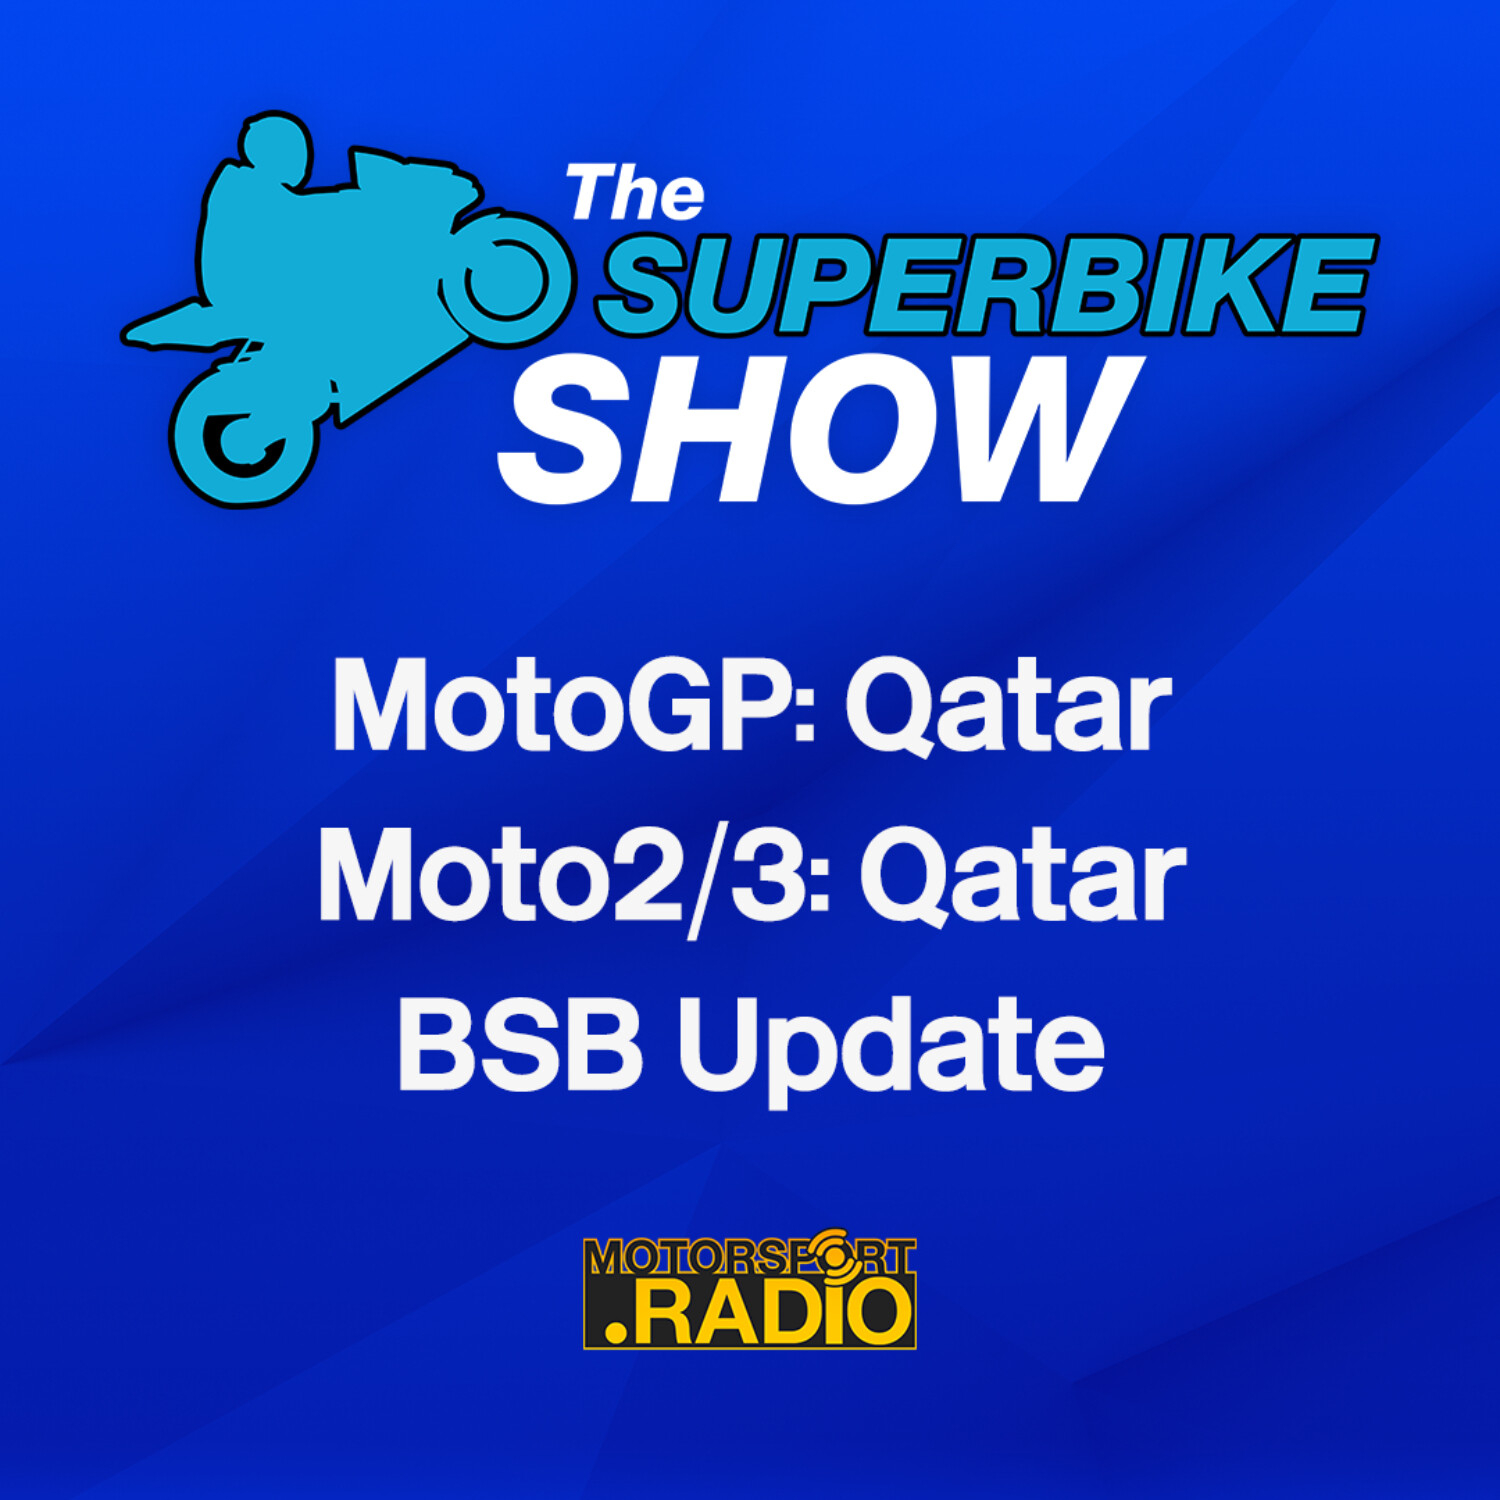 The Superbike Show: MotoGP, Moto2, Moto3 at the QatarGP